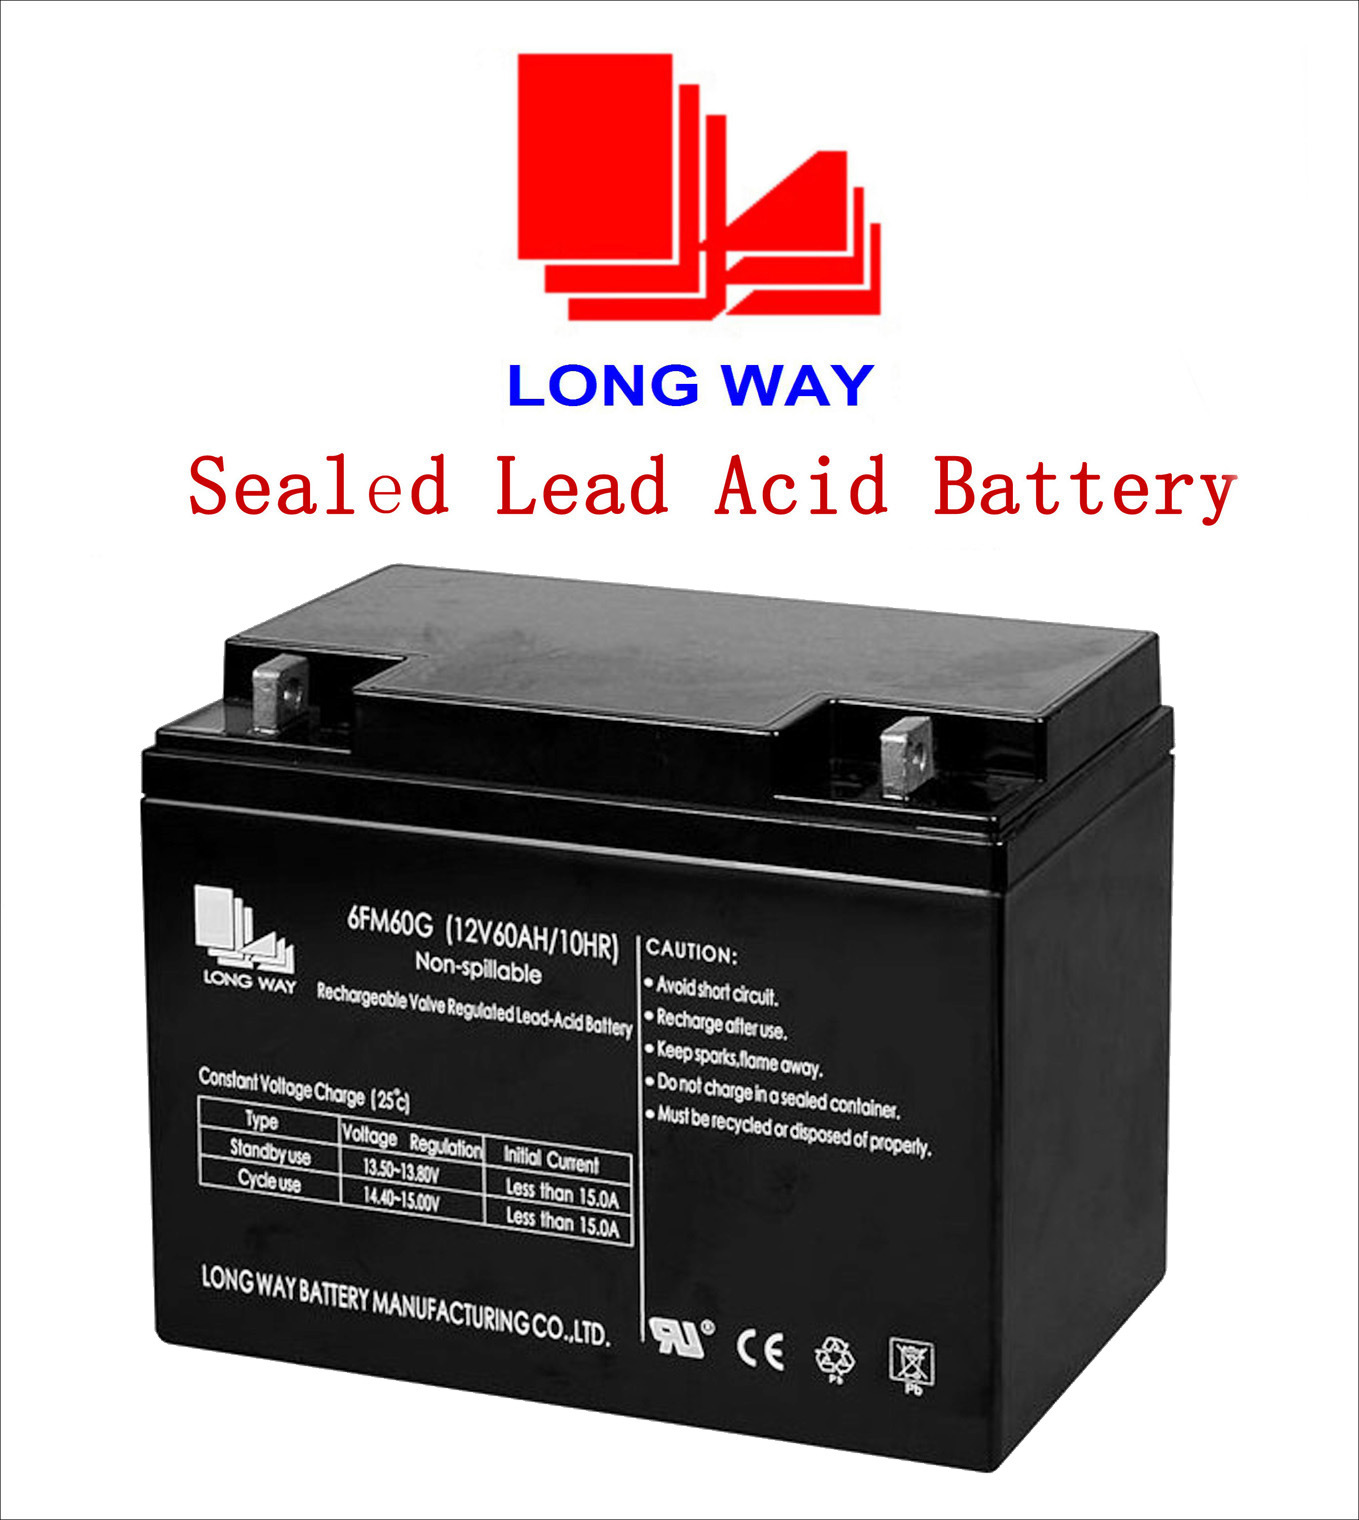 (12V60AH/10HR) Sealed Rechargeable Lead-Acid Battery